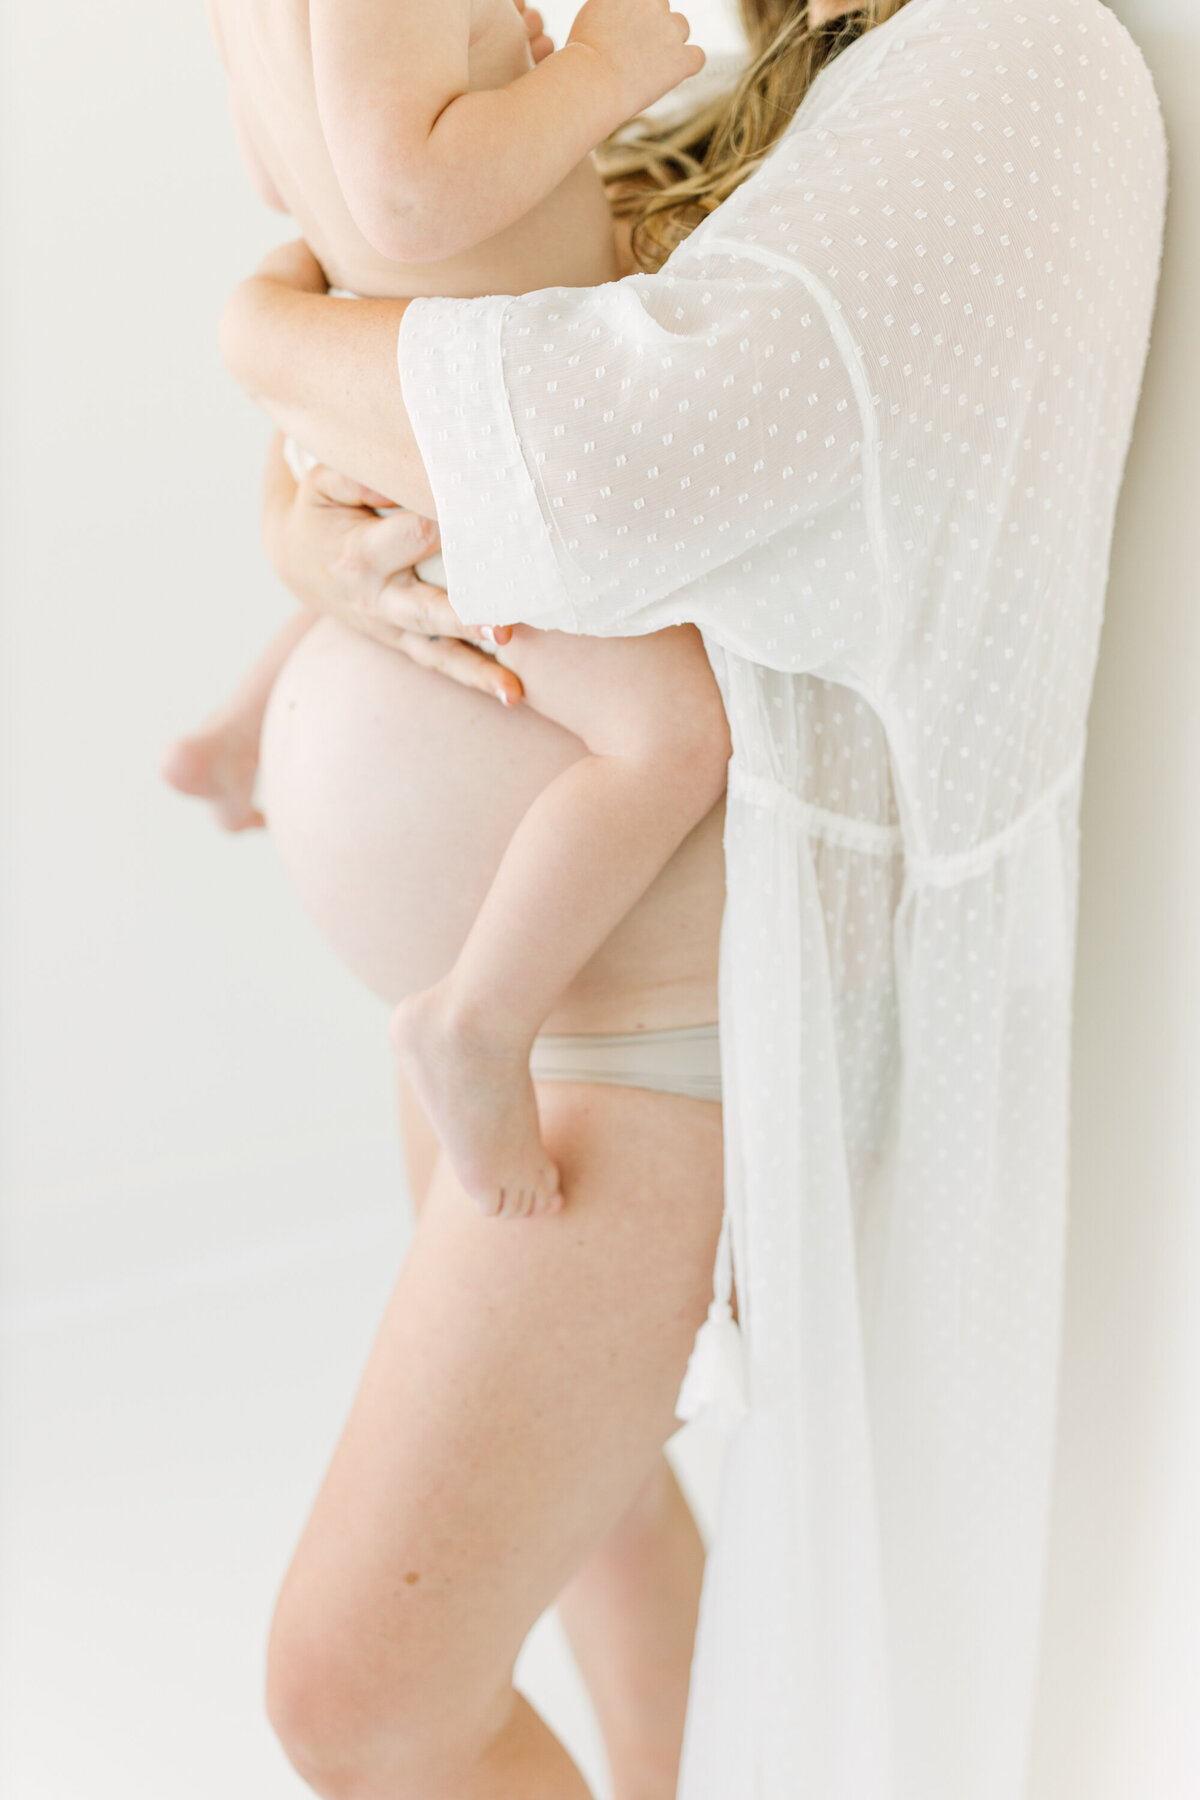 atlanta-maternity-photographer-1-2